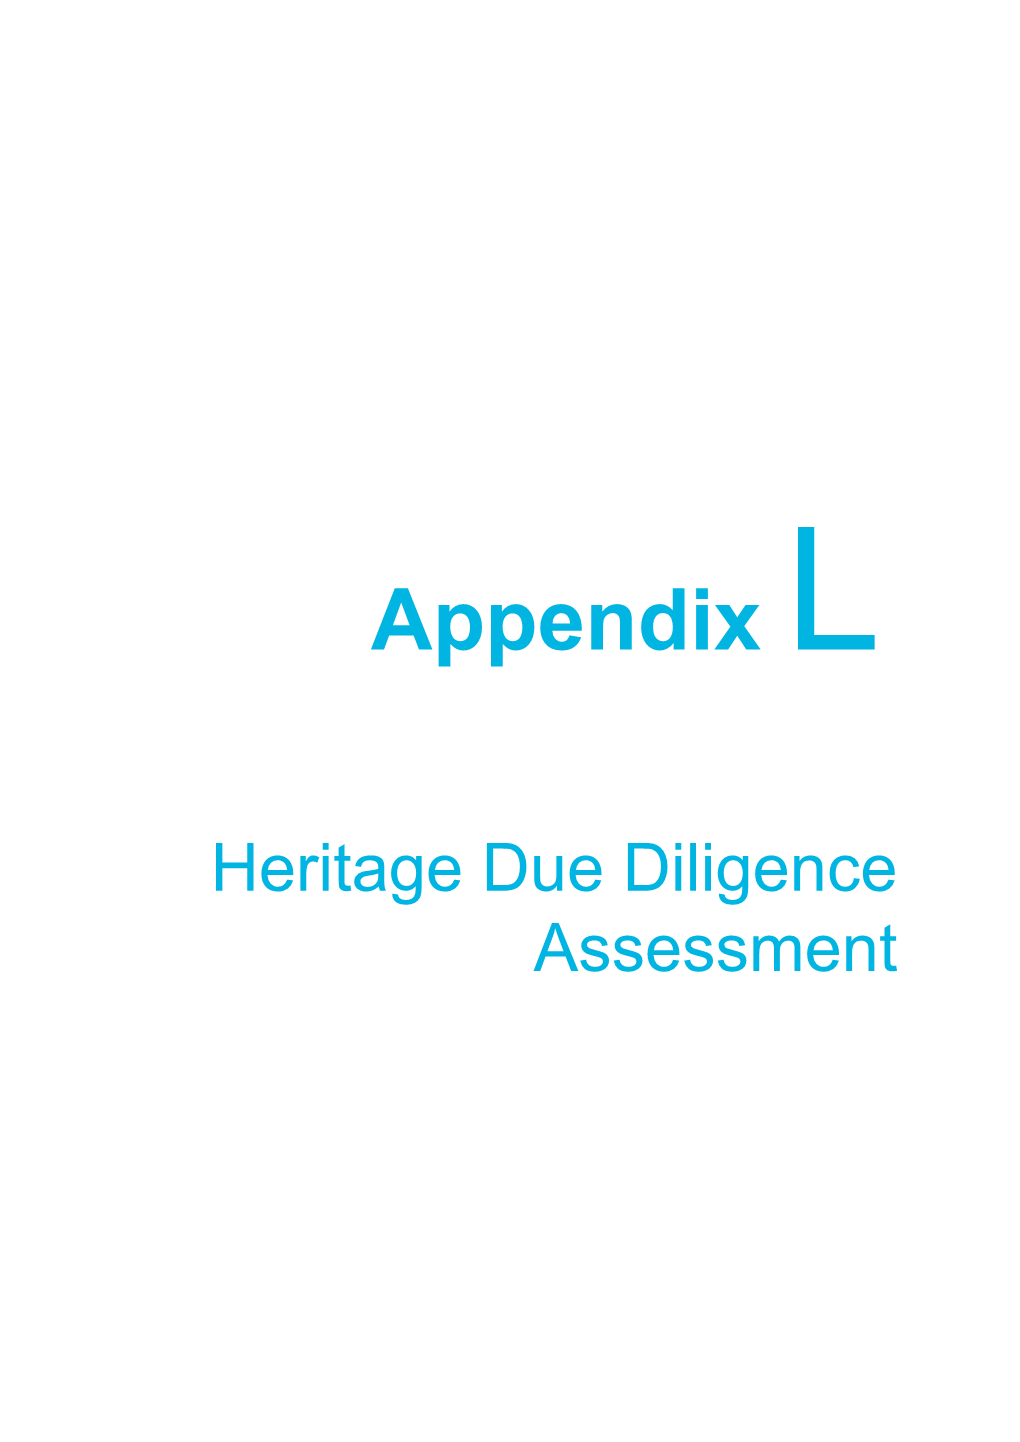 17. Heritage Due Diligence Assessment